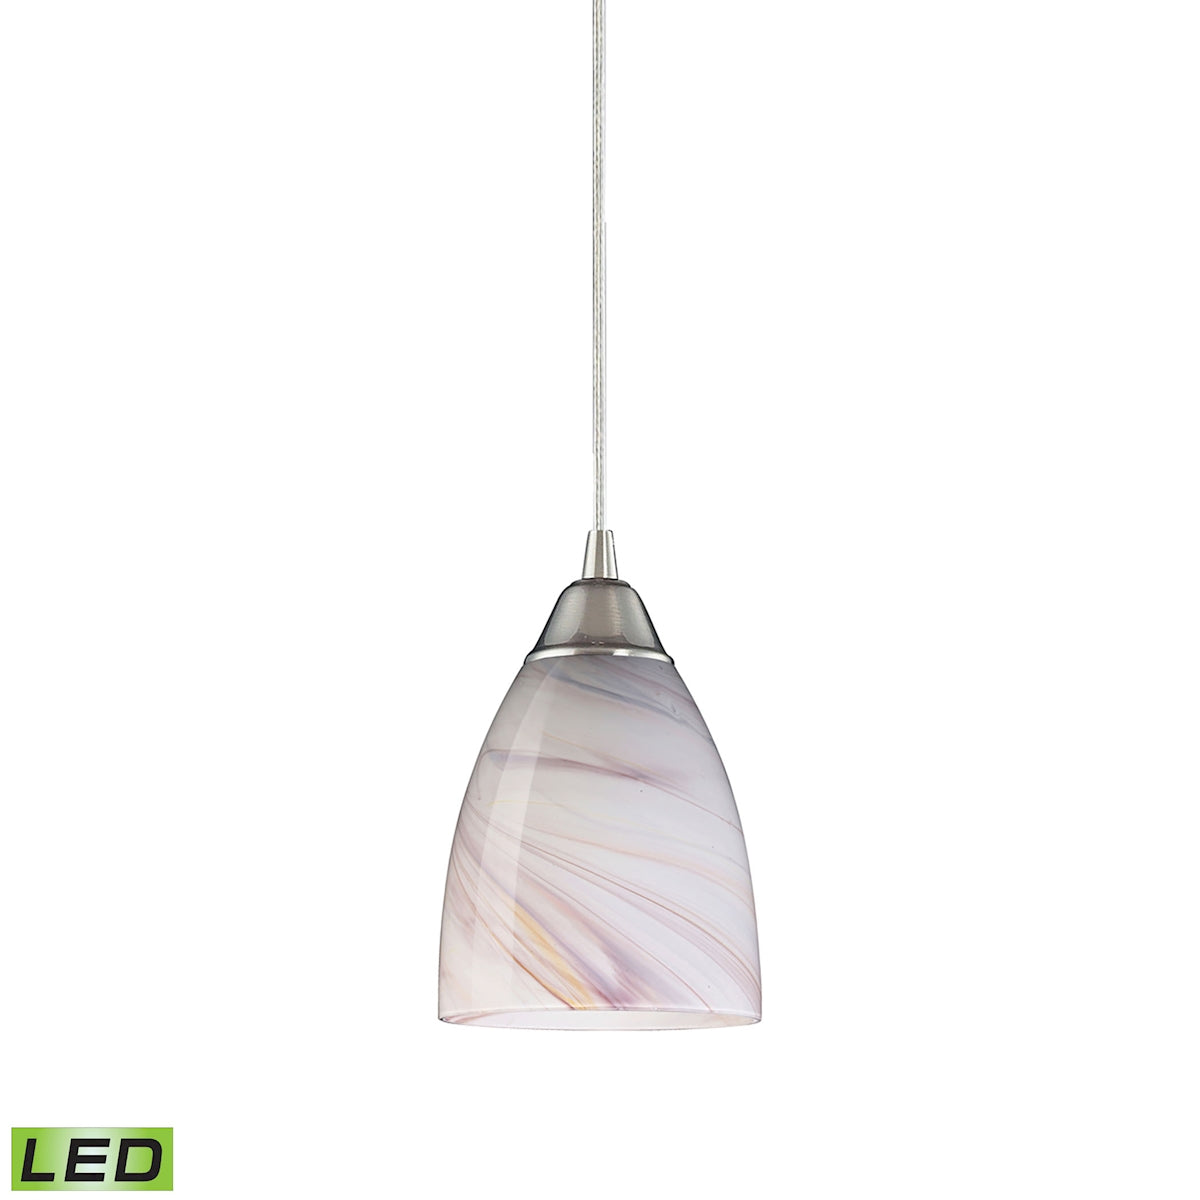 ELK Lighting 527-1CR-LED Pierra 1-Light Mini Pendant in Satin Nickel with Creme Swirl Glass - Includes LED Bulb